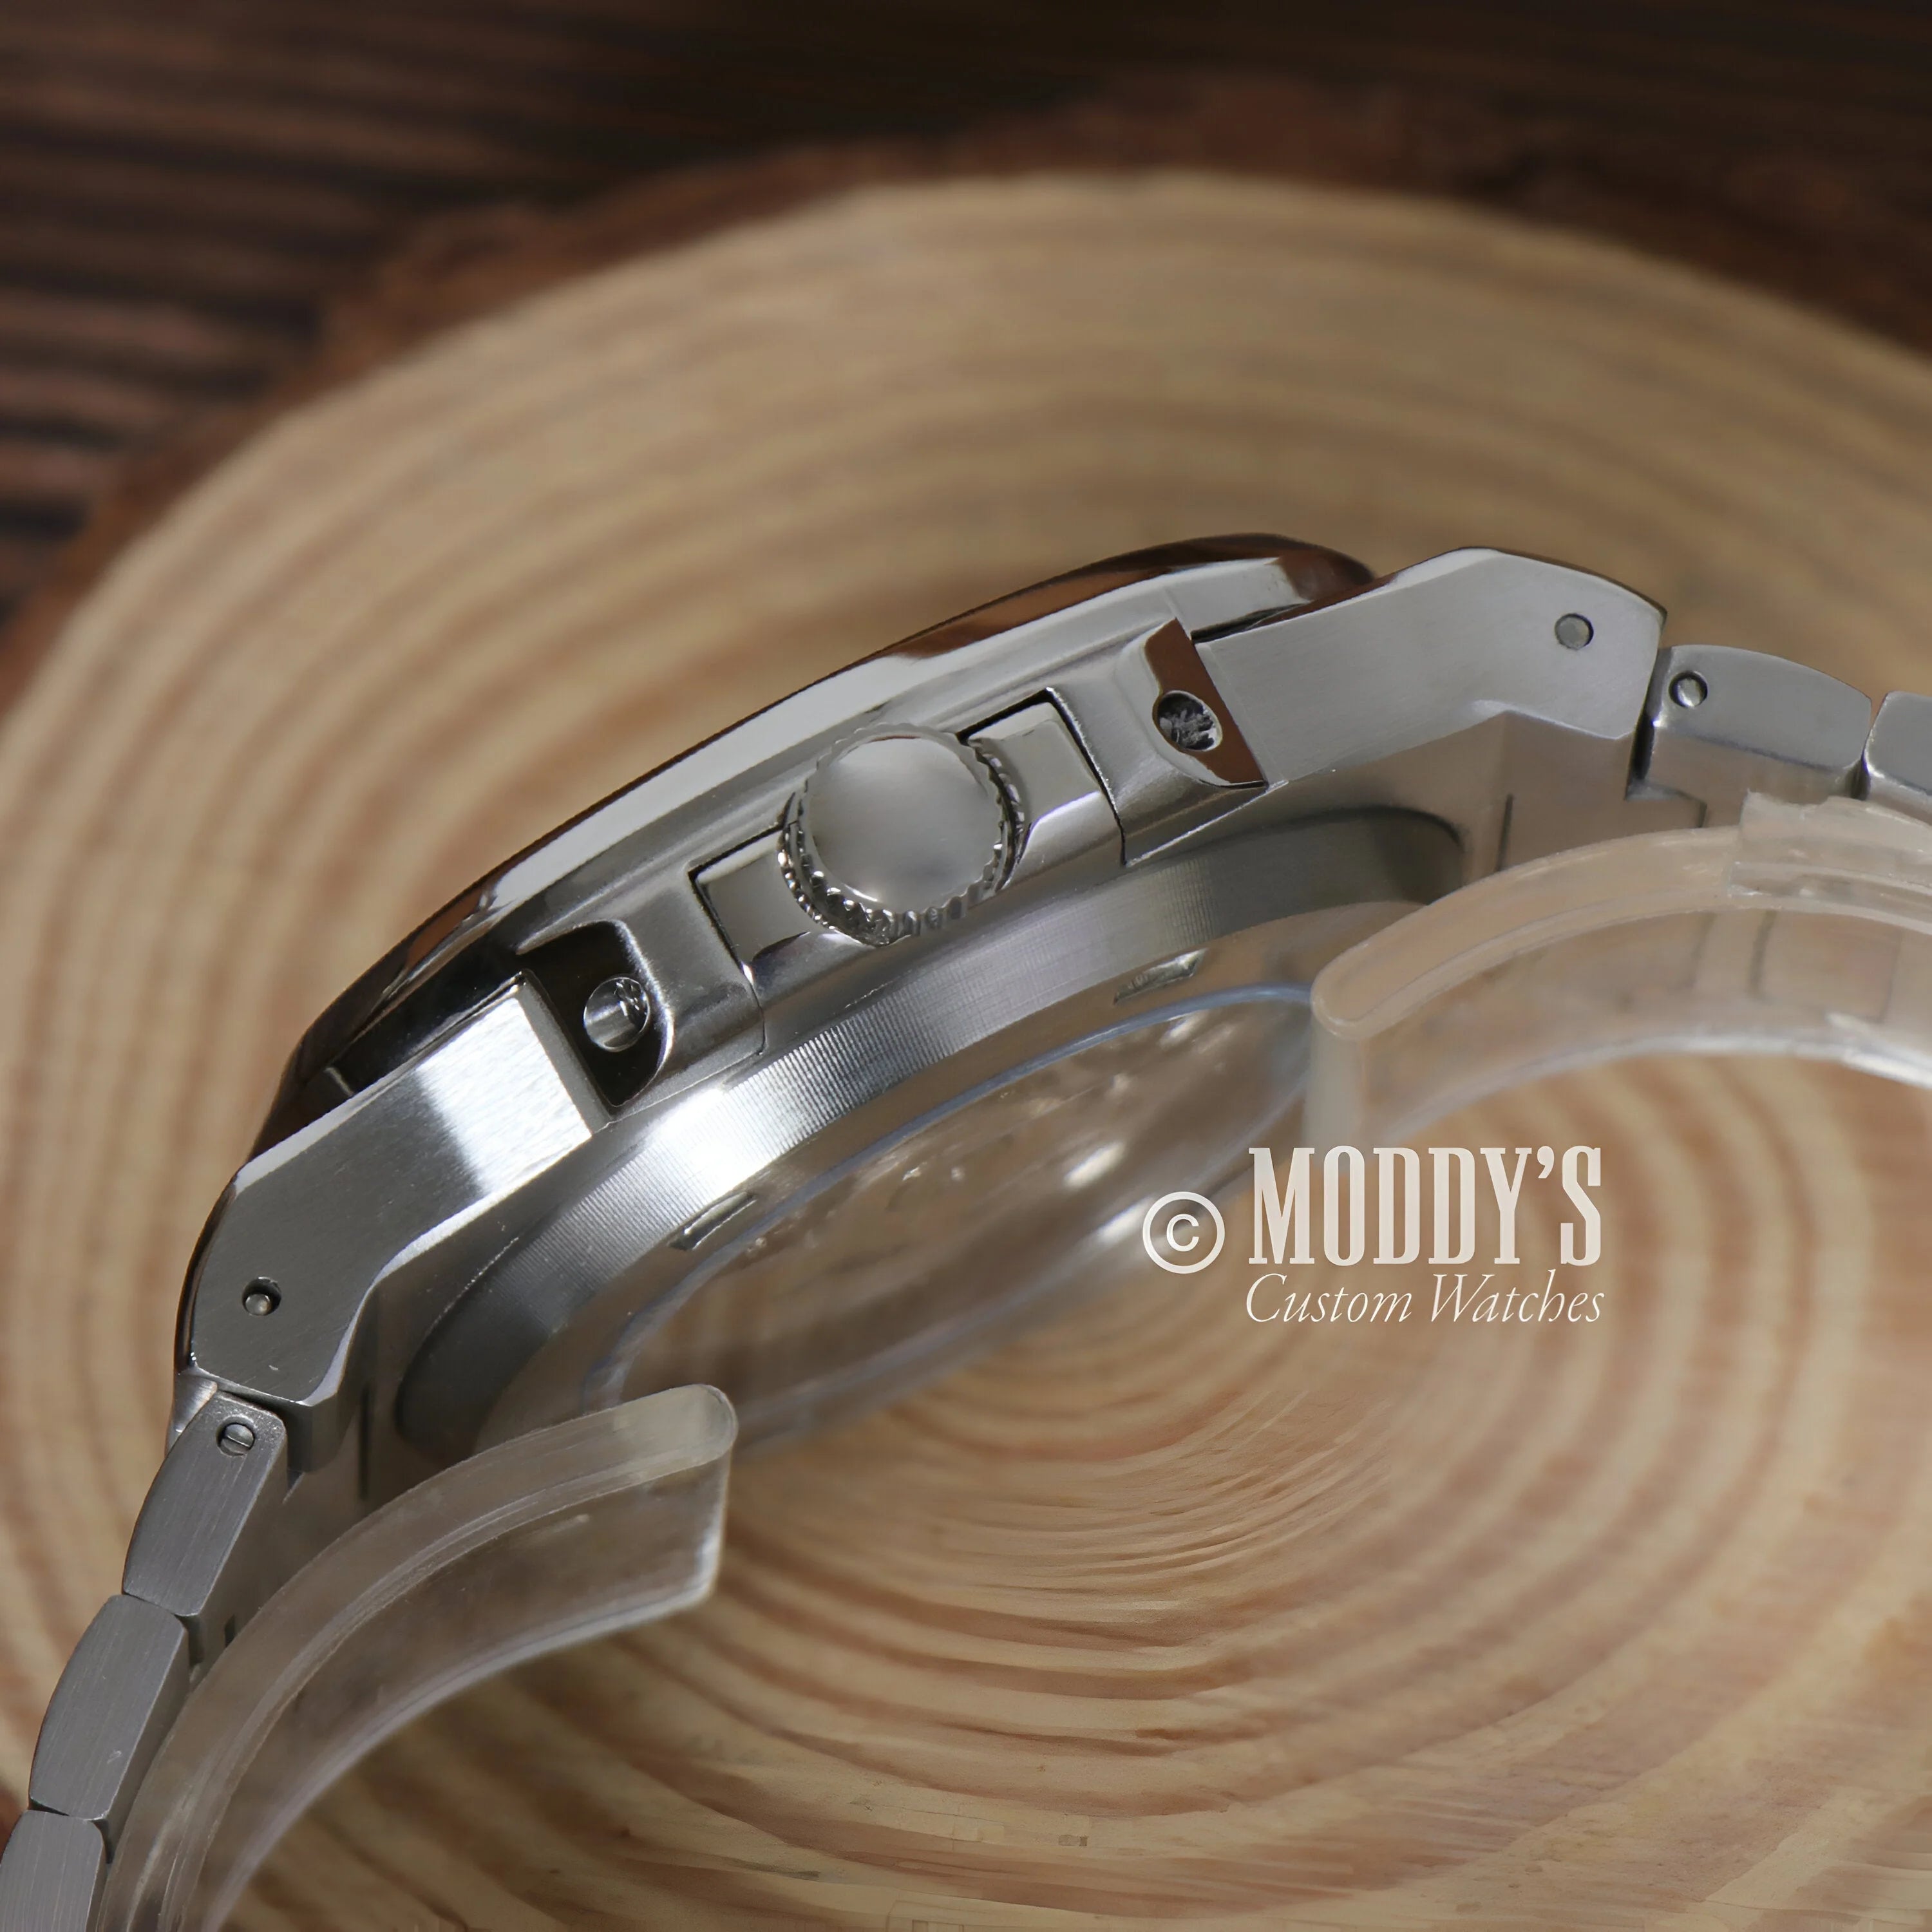 Nautiko White Silver Wristwatch With Metal Bracelet And Visible Crown, Elegant Case Design